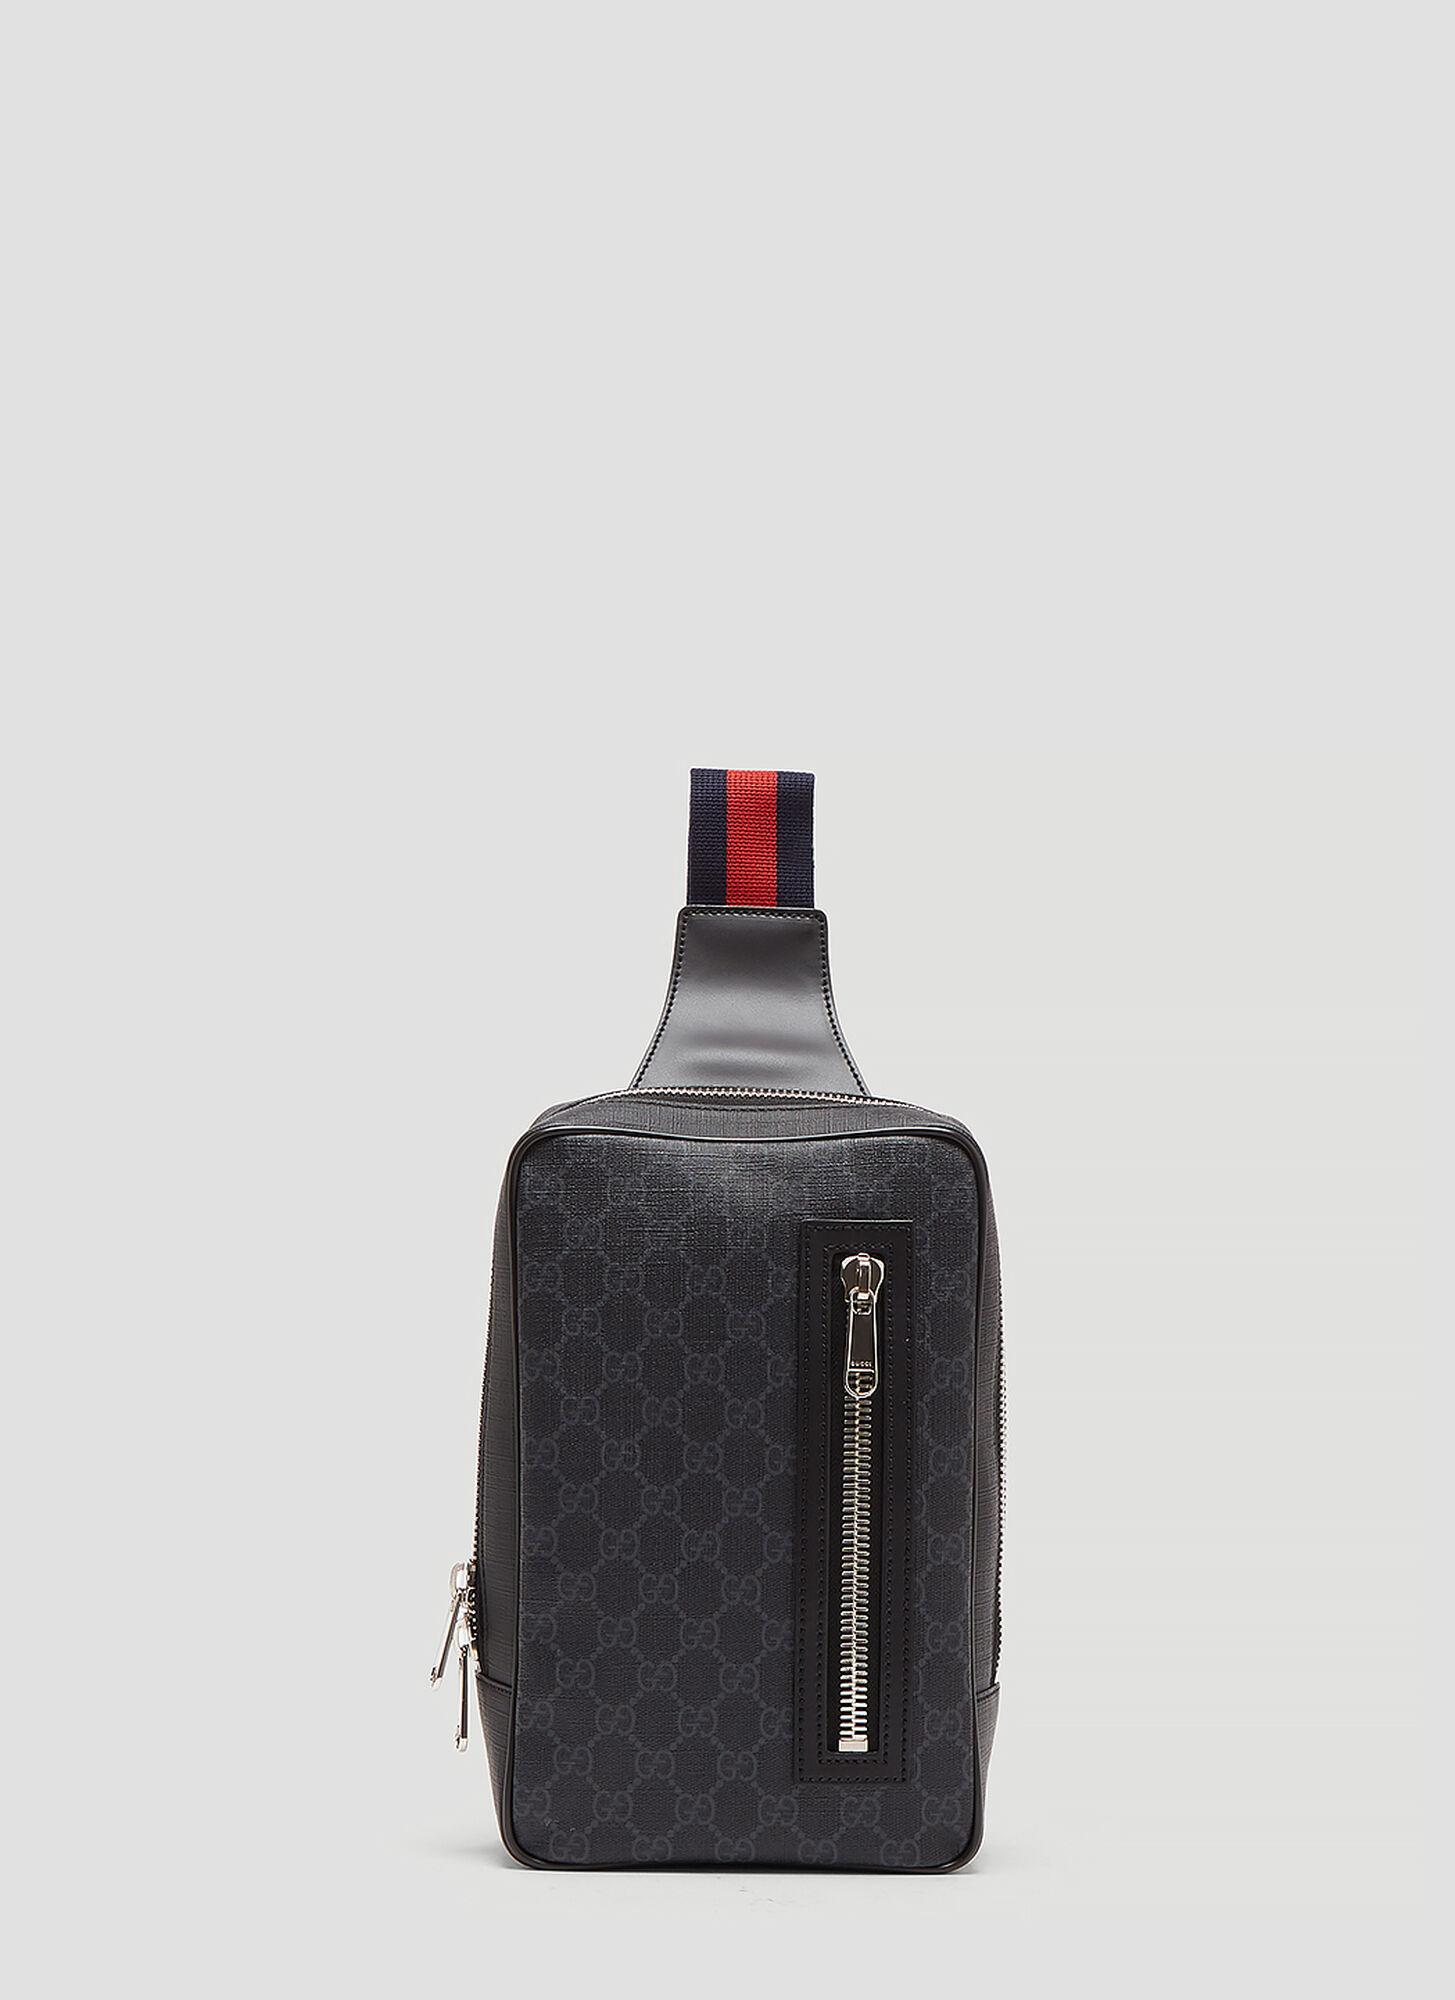 Gucci GG Supreme Web Belt Cross Body Bag in Black size One Size | The Fashionisto